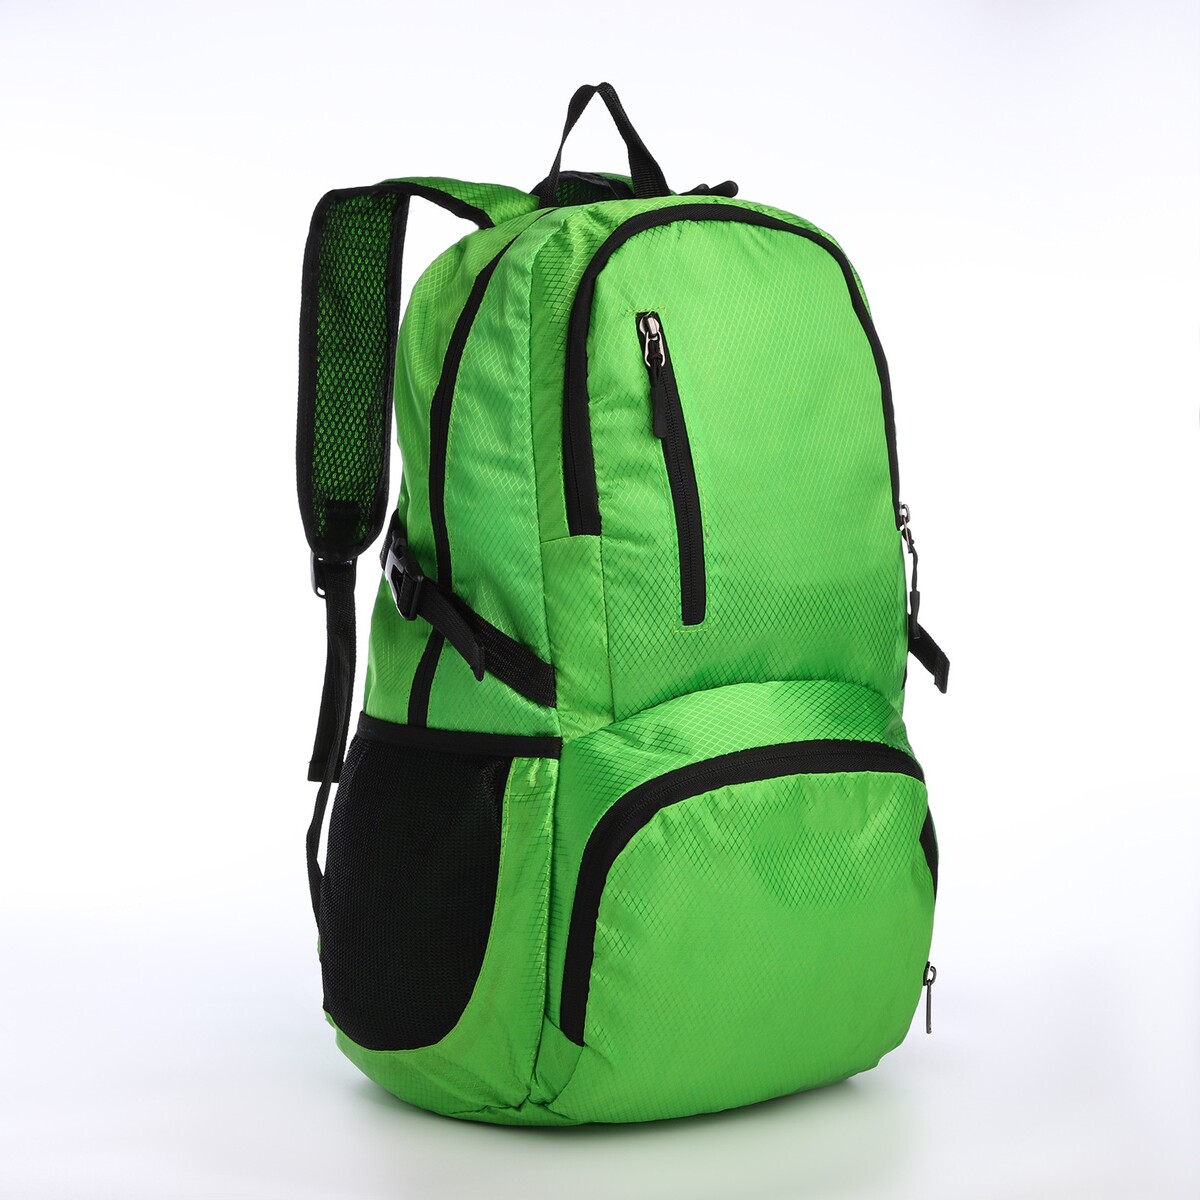 Рюкзак складной на молнии из текстиля, 5 карманов, цвет зеленый рюкзак складной турист 25 л 28 16 45 отд на молнии 2 н к 2 б к водонепрониц оранжевый 10189